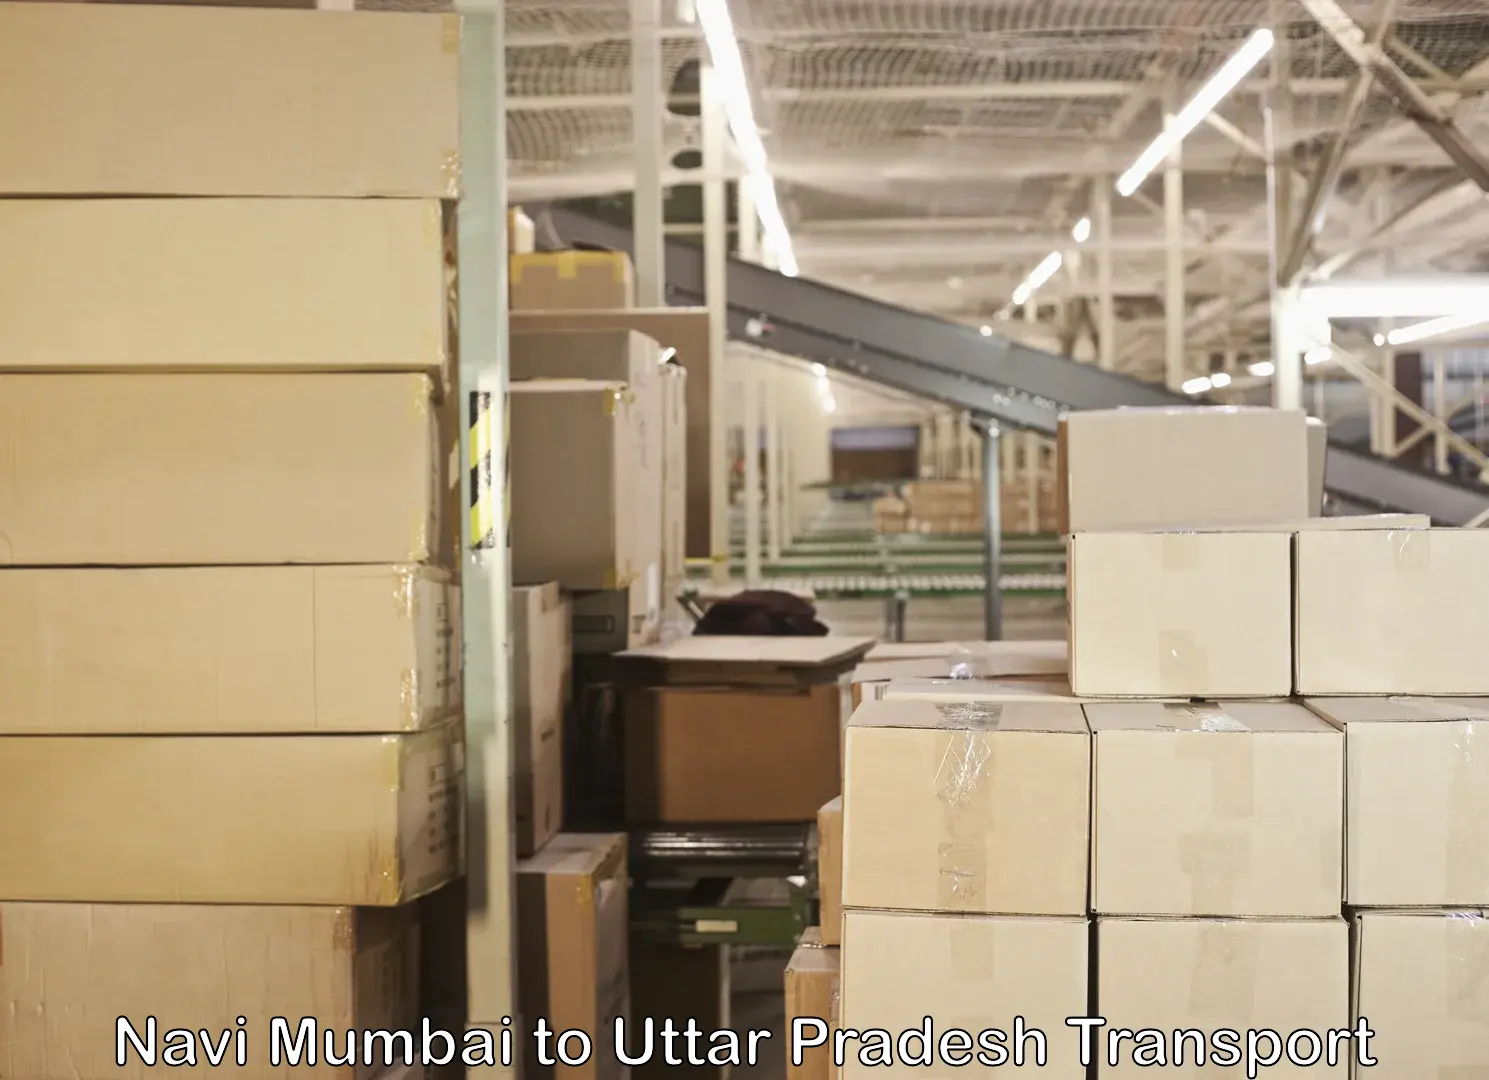 Truck transport companies in India Navi Mumbai to Firozabad